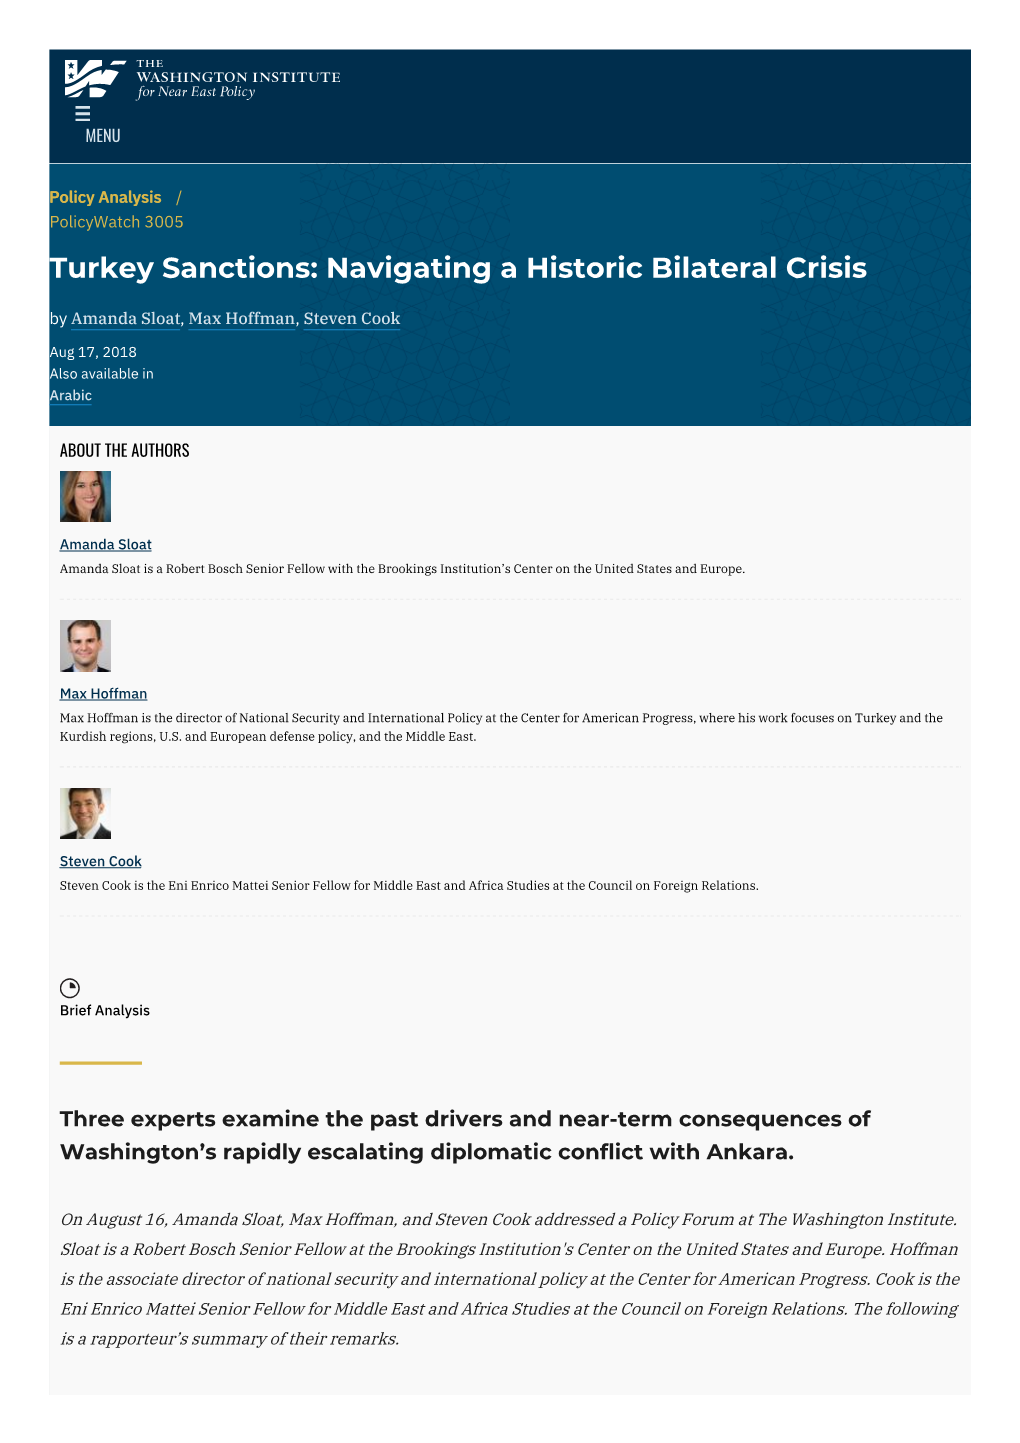 Turkey Sanctions: Navigating a Historic Bilateral Crisis by Amanda Sloat, Max Hoffman, Steven Cook